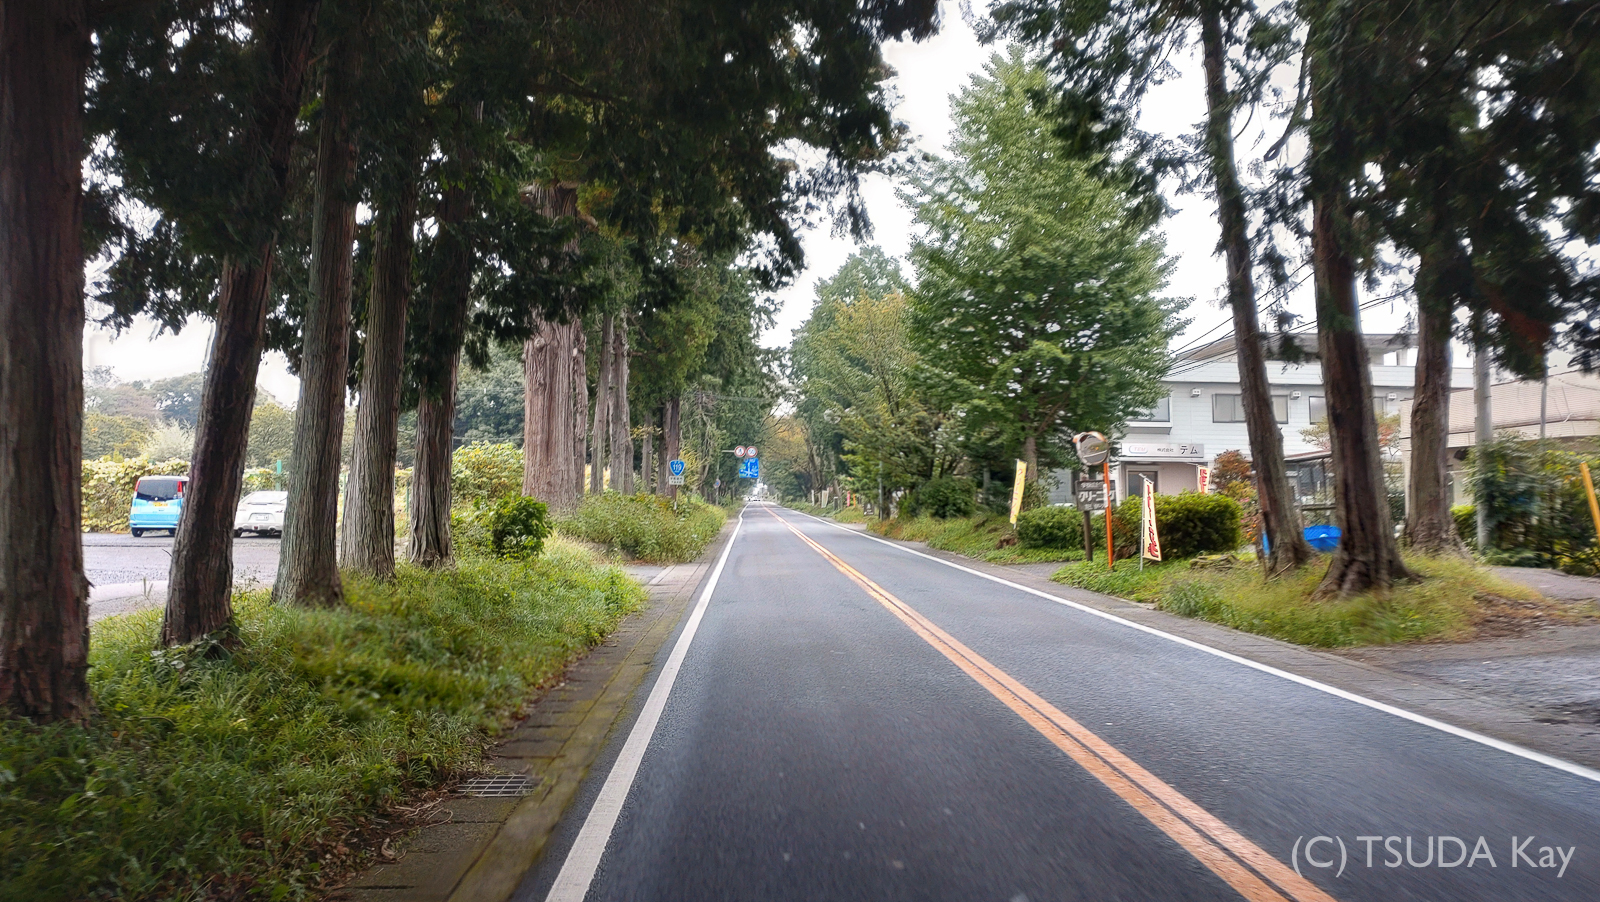 I cycled old nikko road 20